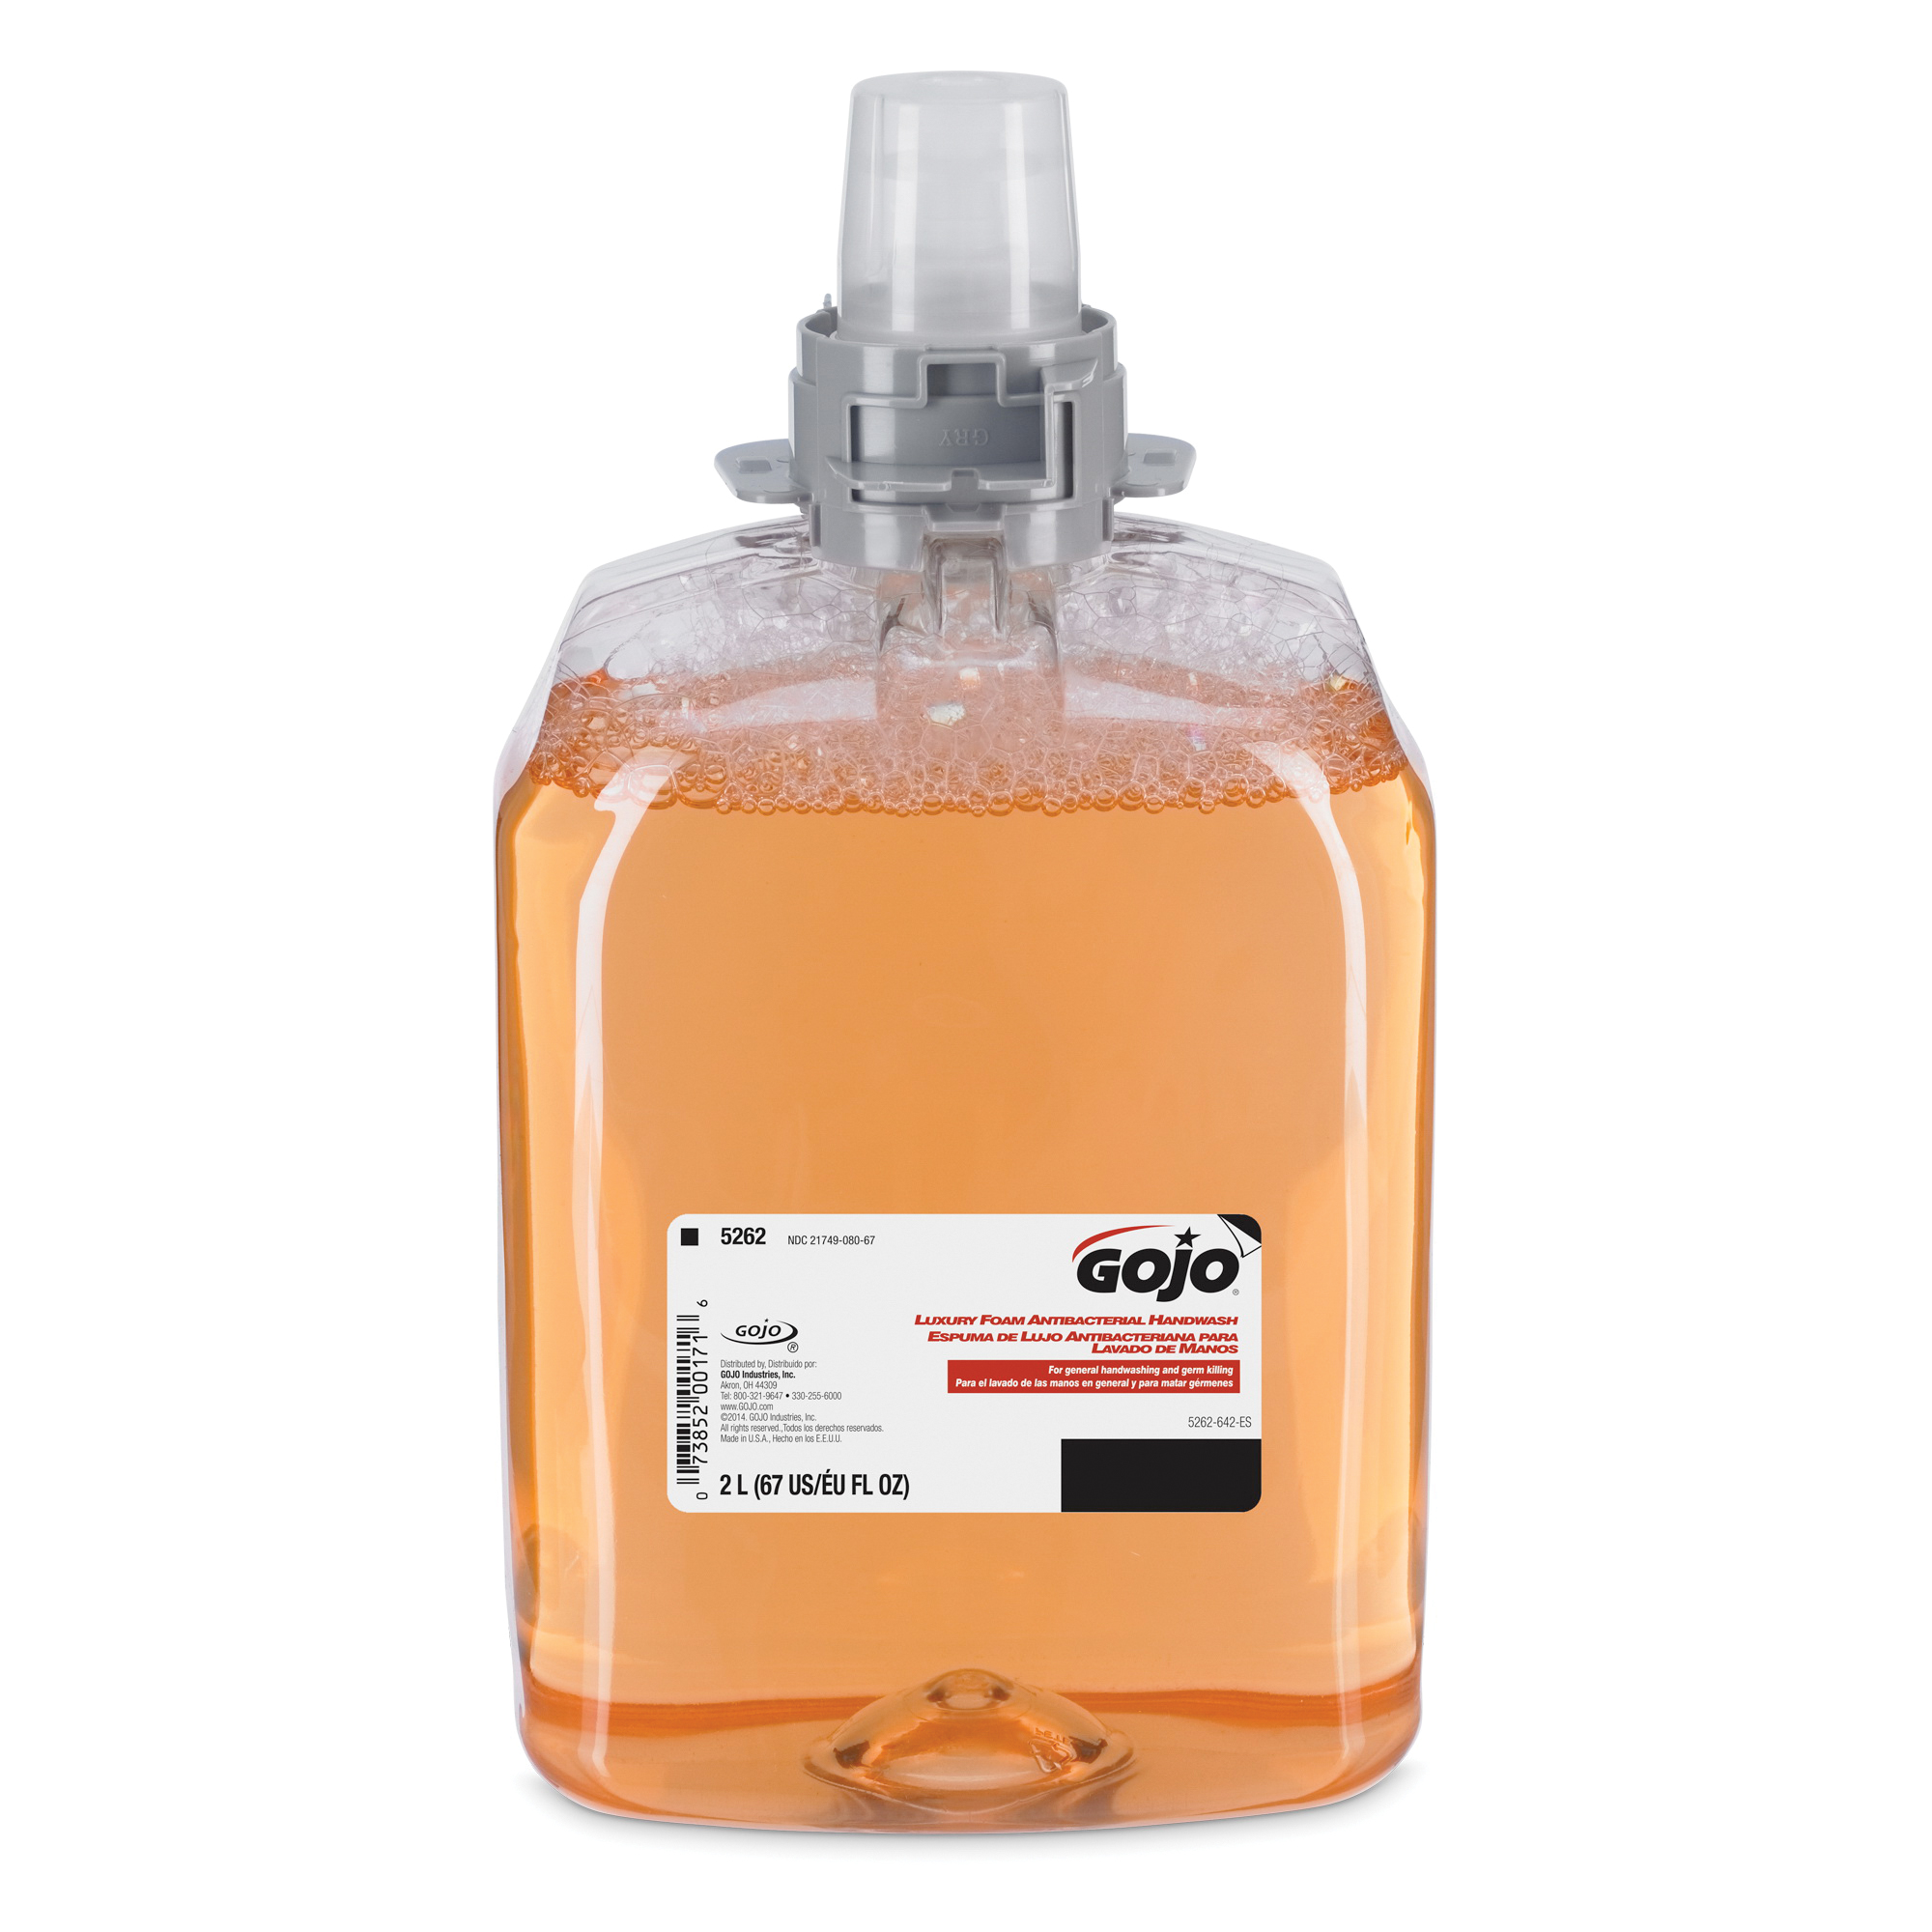 PROVON® 5186-03 Antimicrobial Handwash, 1250 mL Nominal, Dispenser Refill Package, Foam Form, Fruity Odor/Scent, Orange